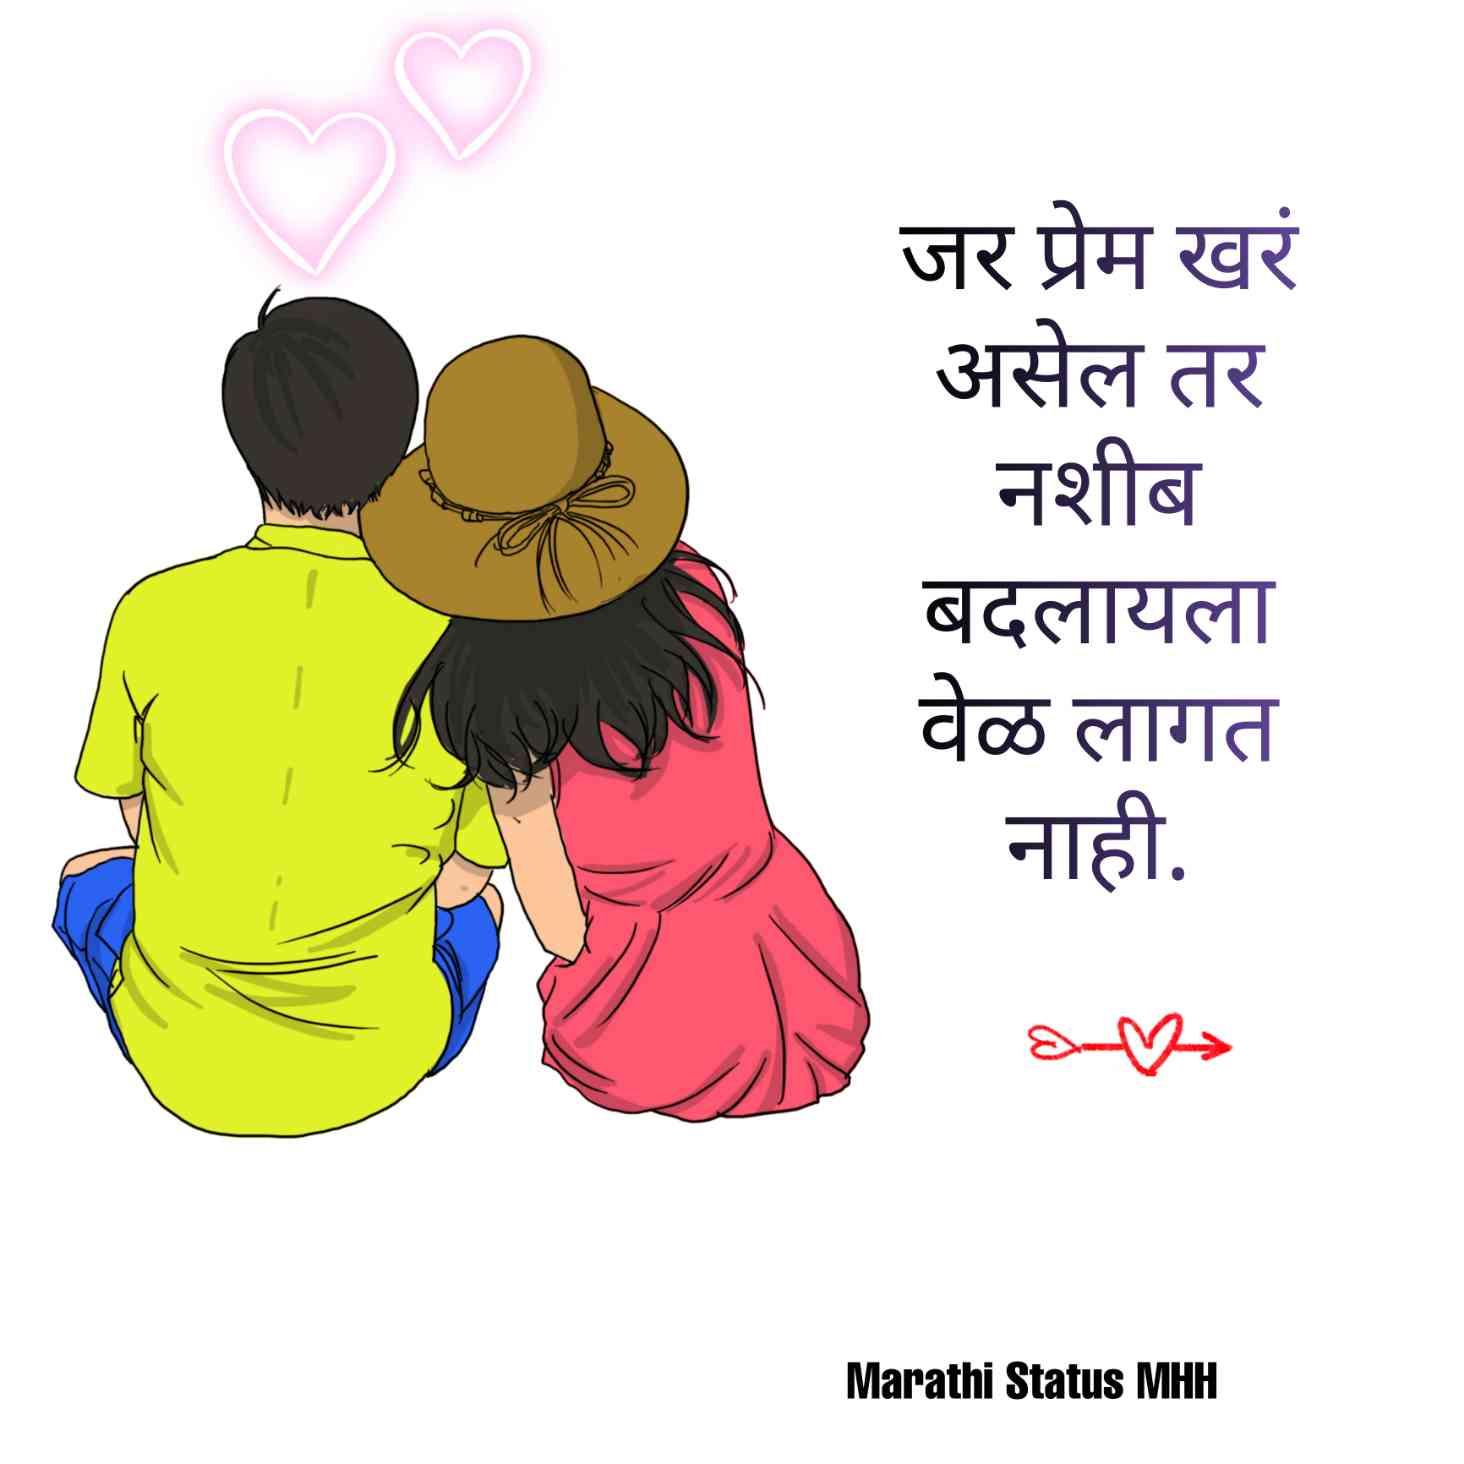 True love quotes in marathi for girlfriend